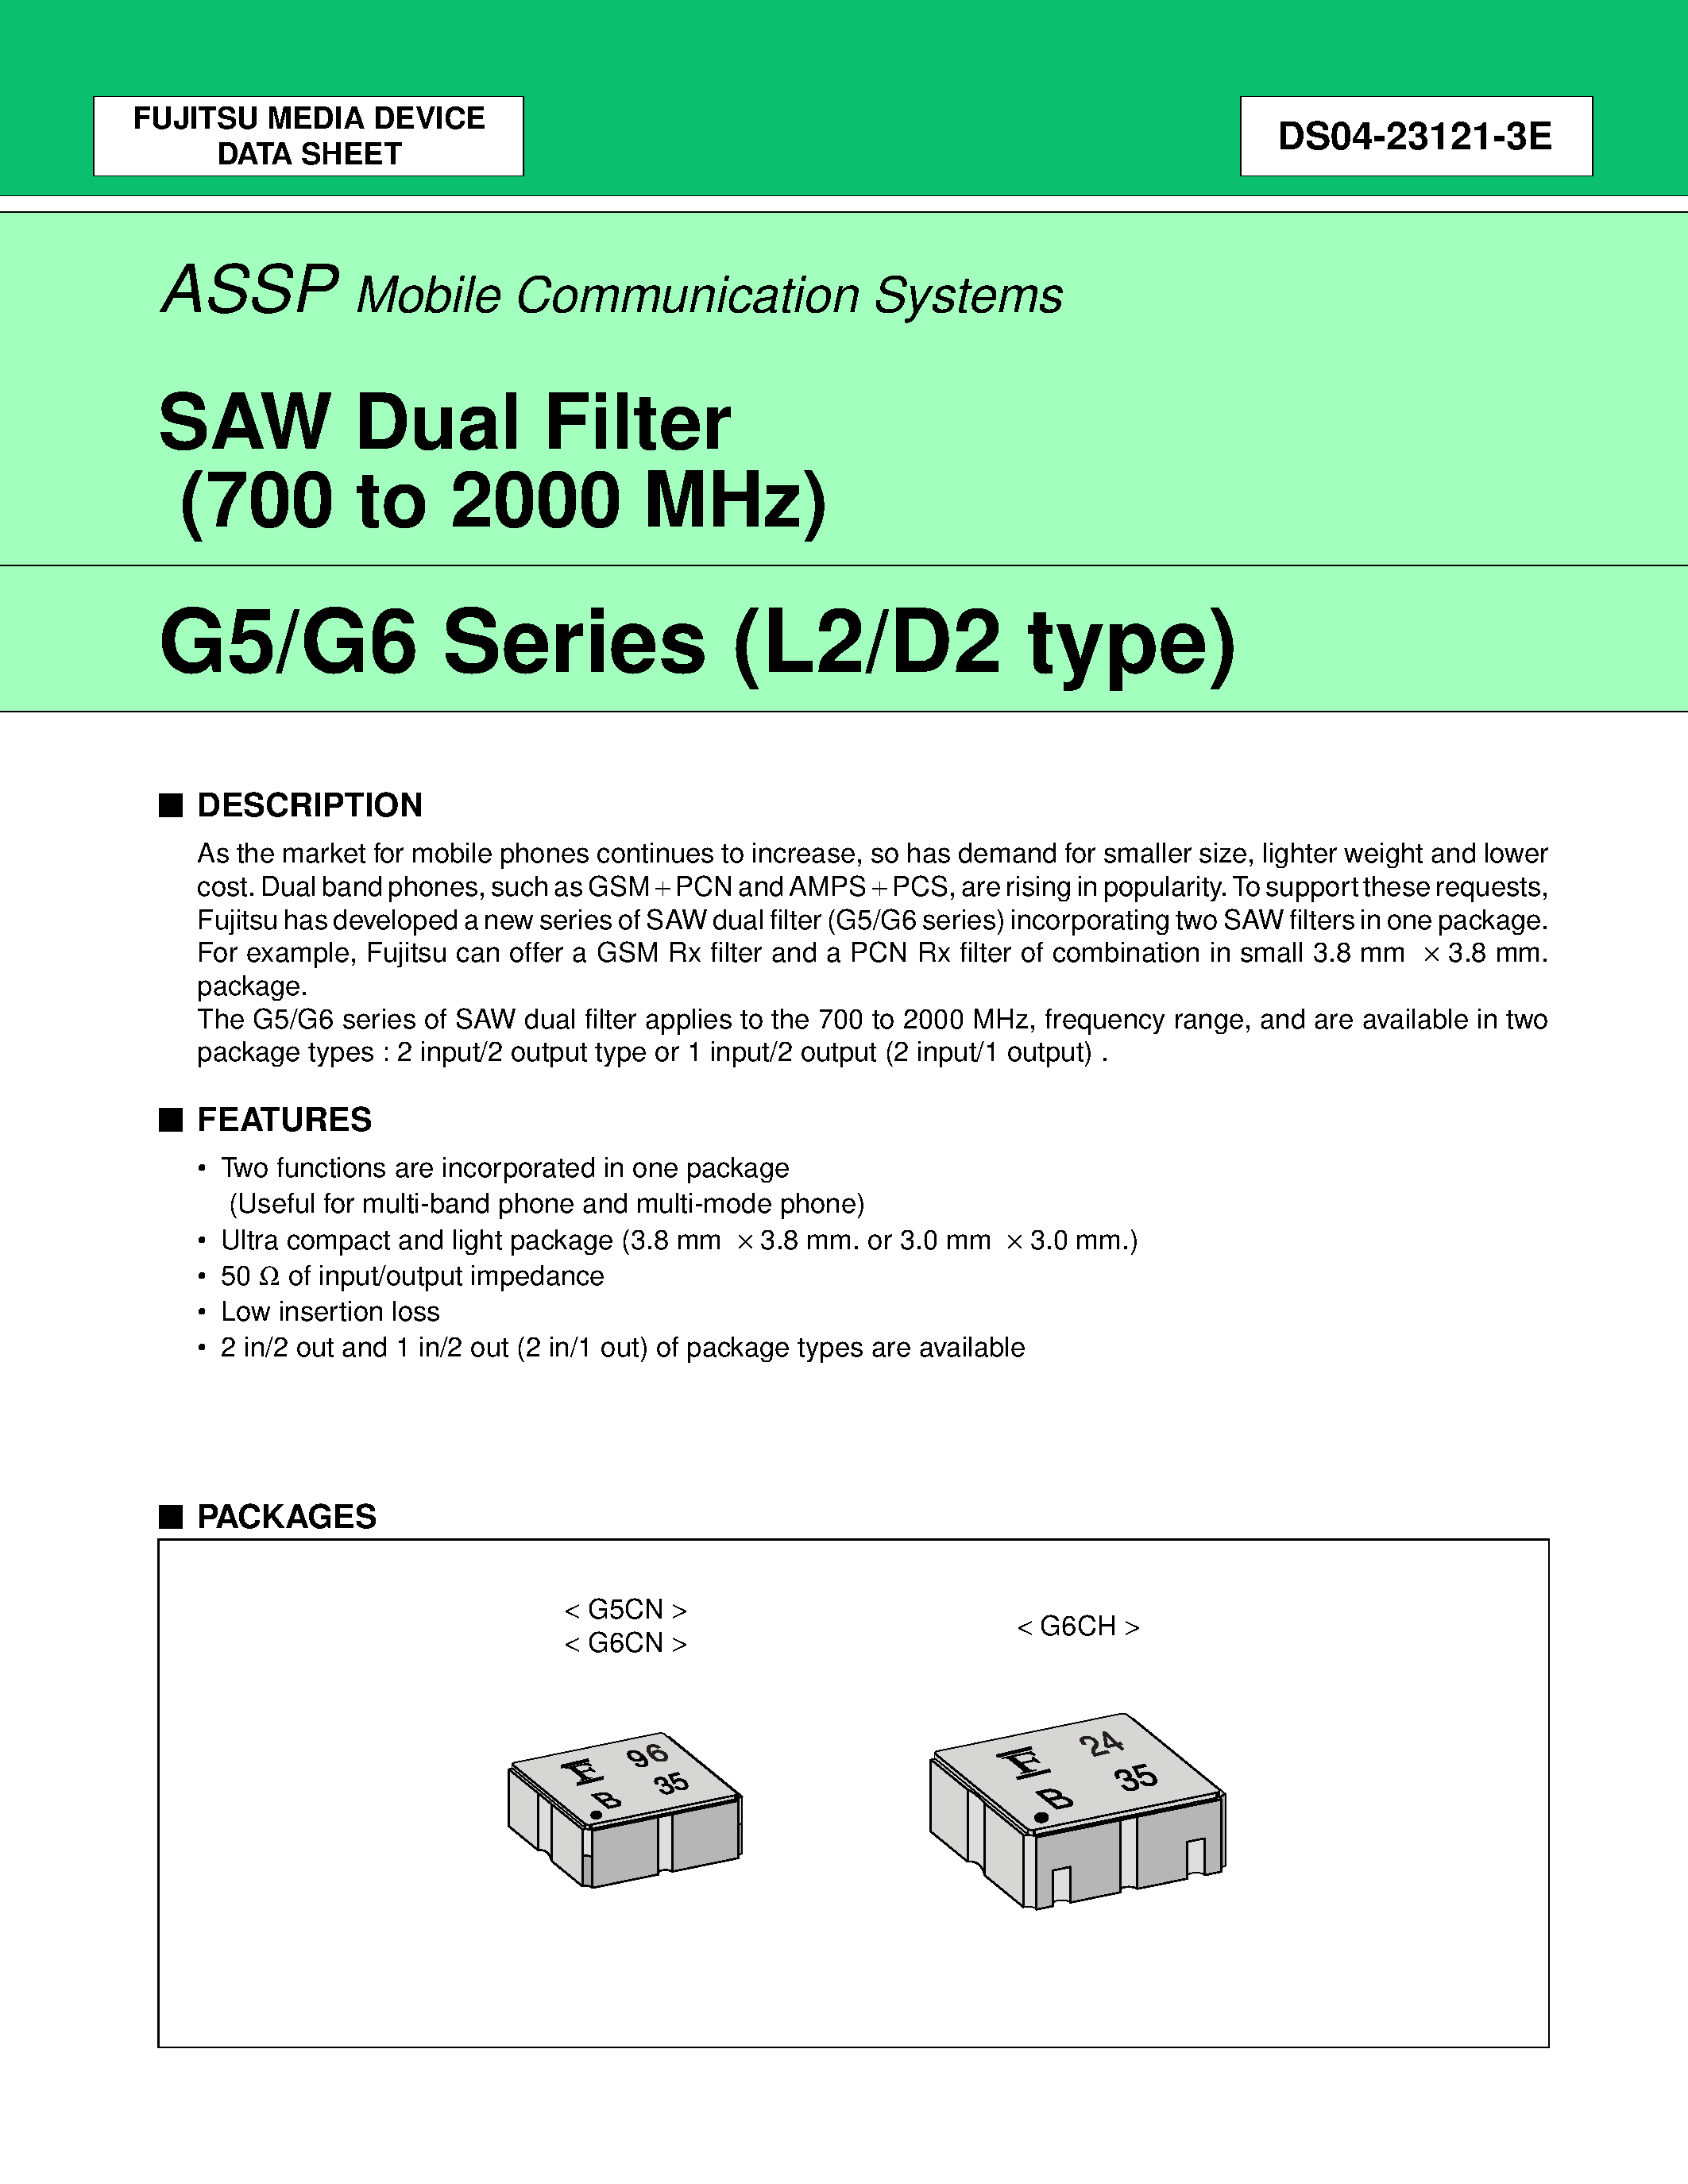 Даташит FAR-G5CN-942M50-D296-V - SAW Dual Filter (700 to 2000 MHz) страница 1